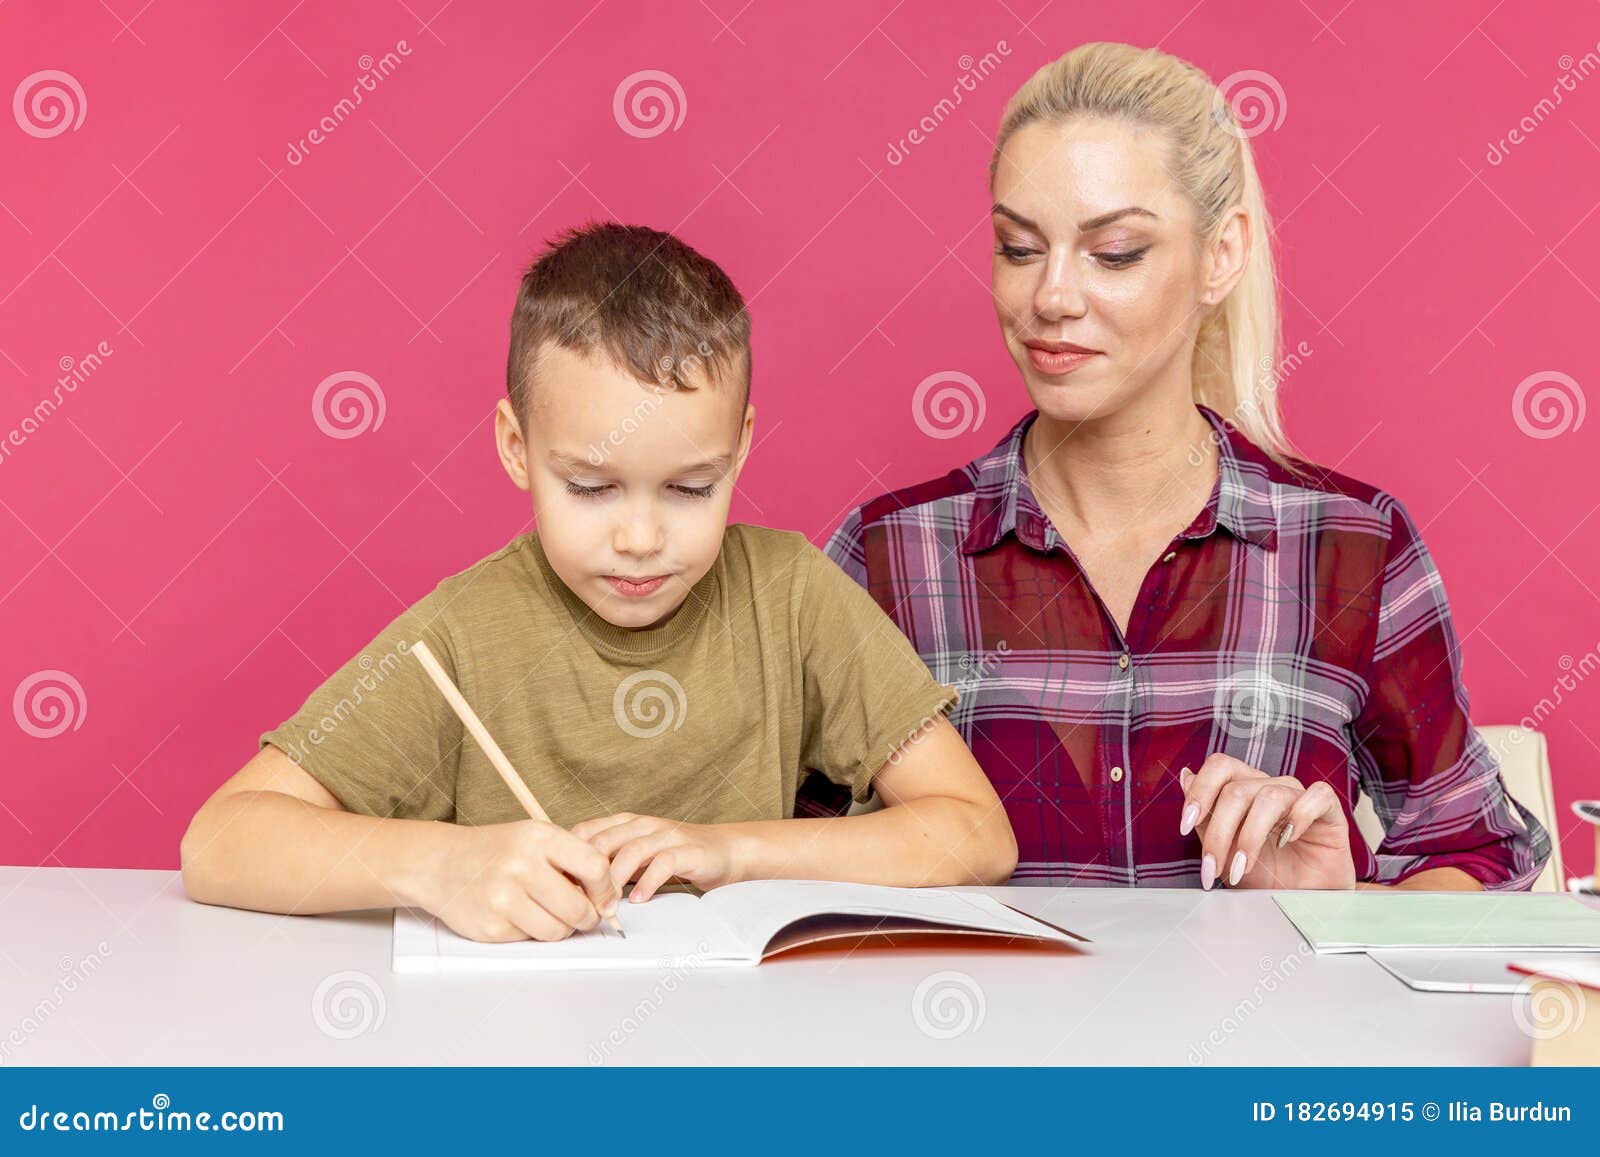 tutor with homework